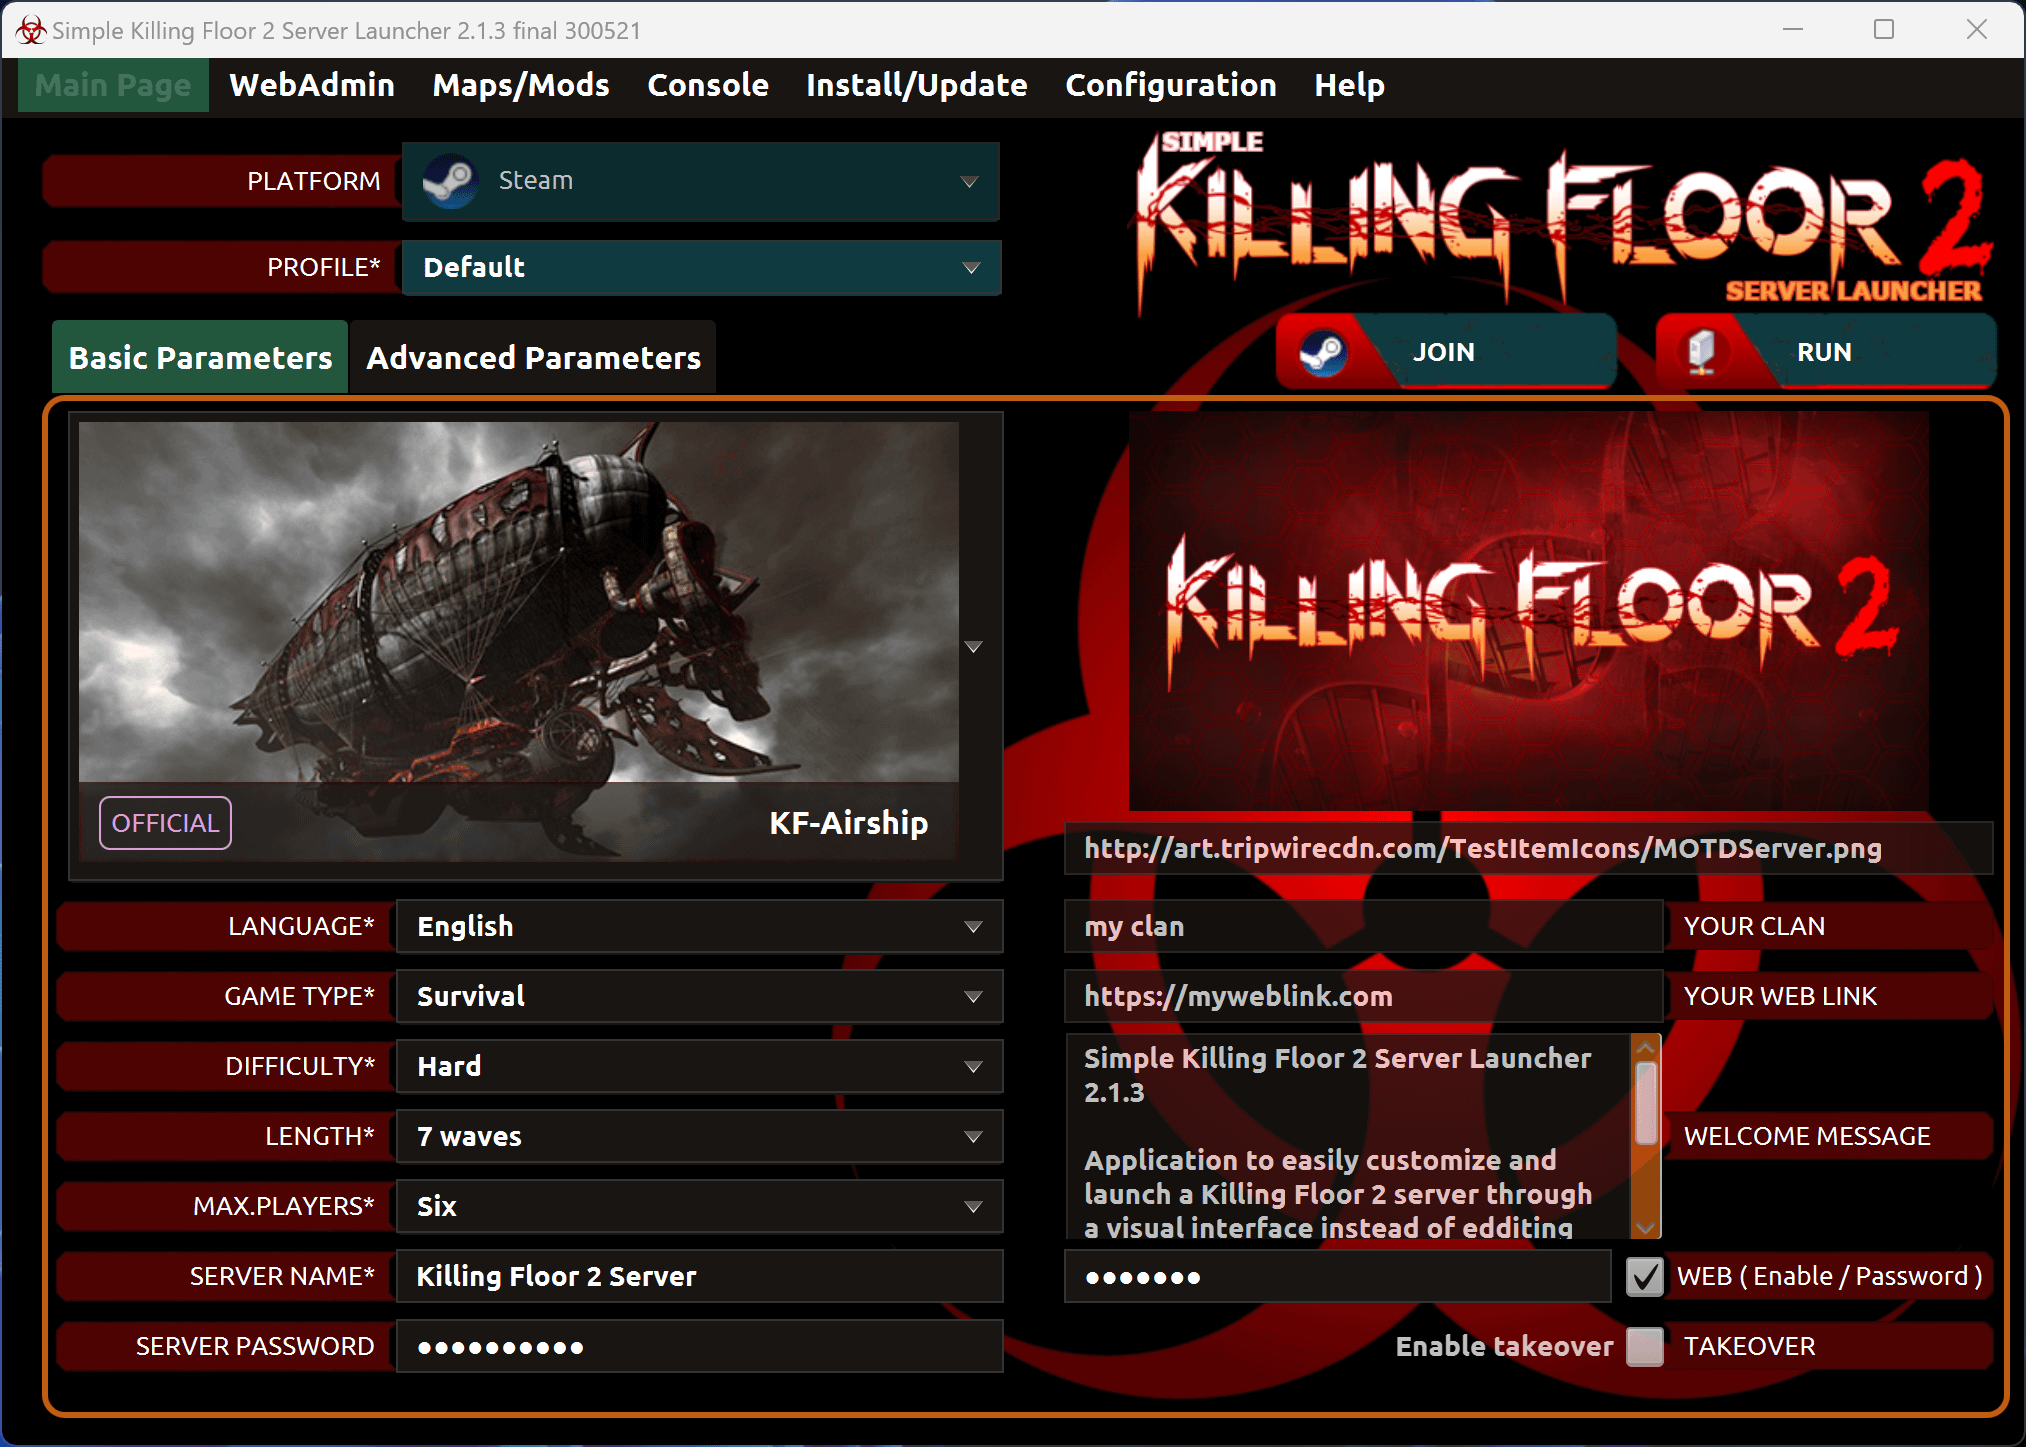 r/killingfloor - Simple Killing Floor 2 Server Launcher v2.1.3